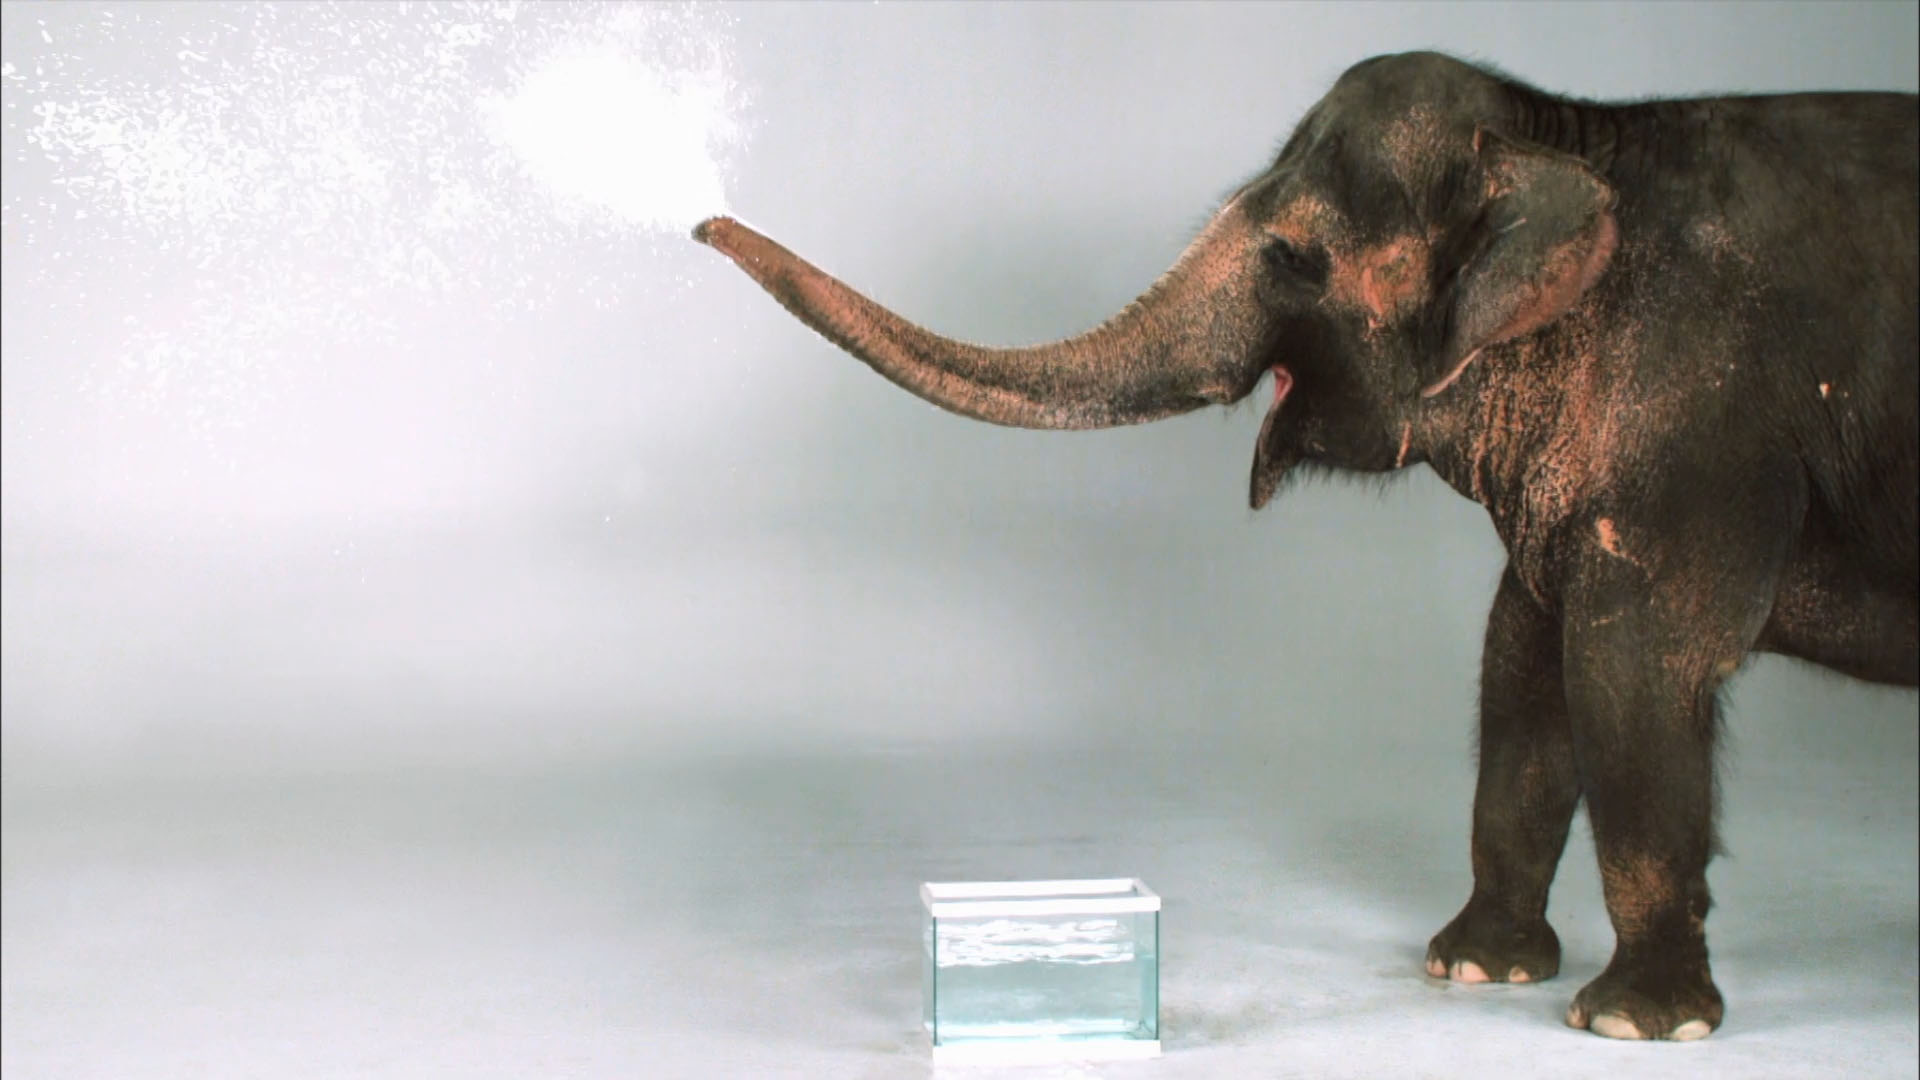 Spray from elephant